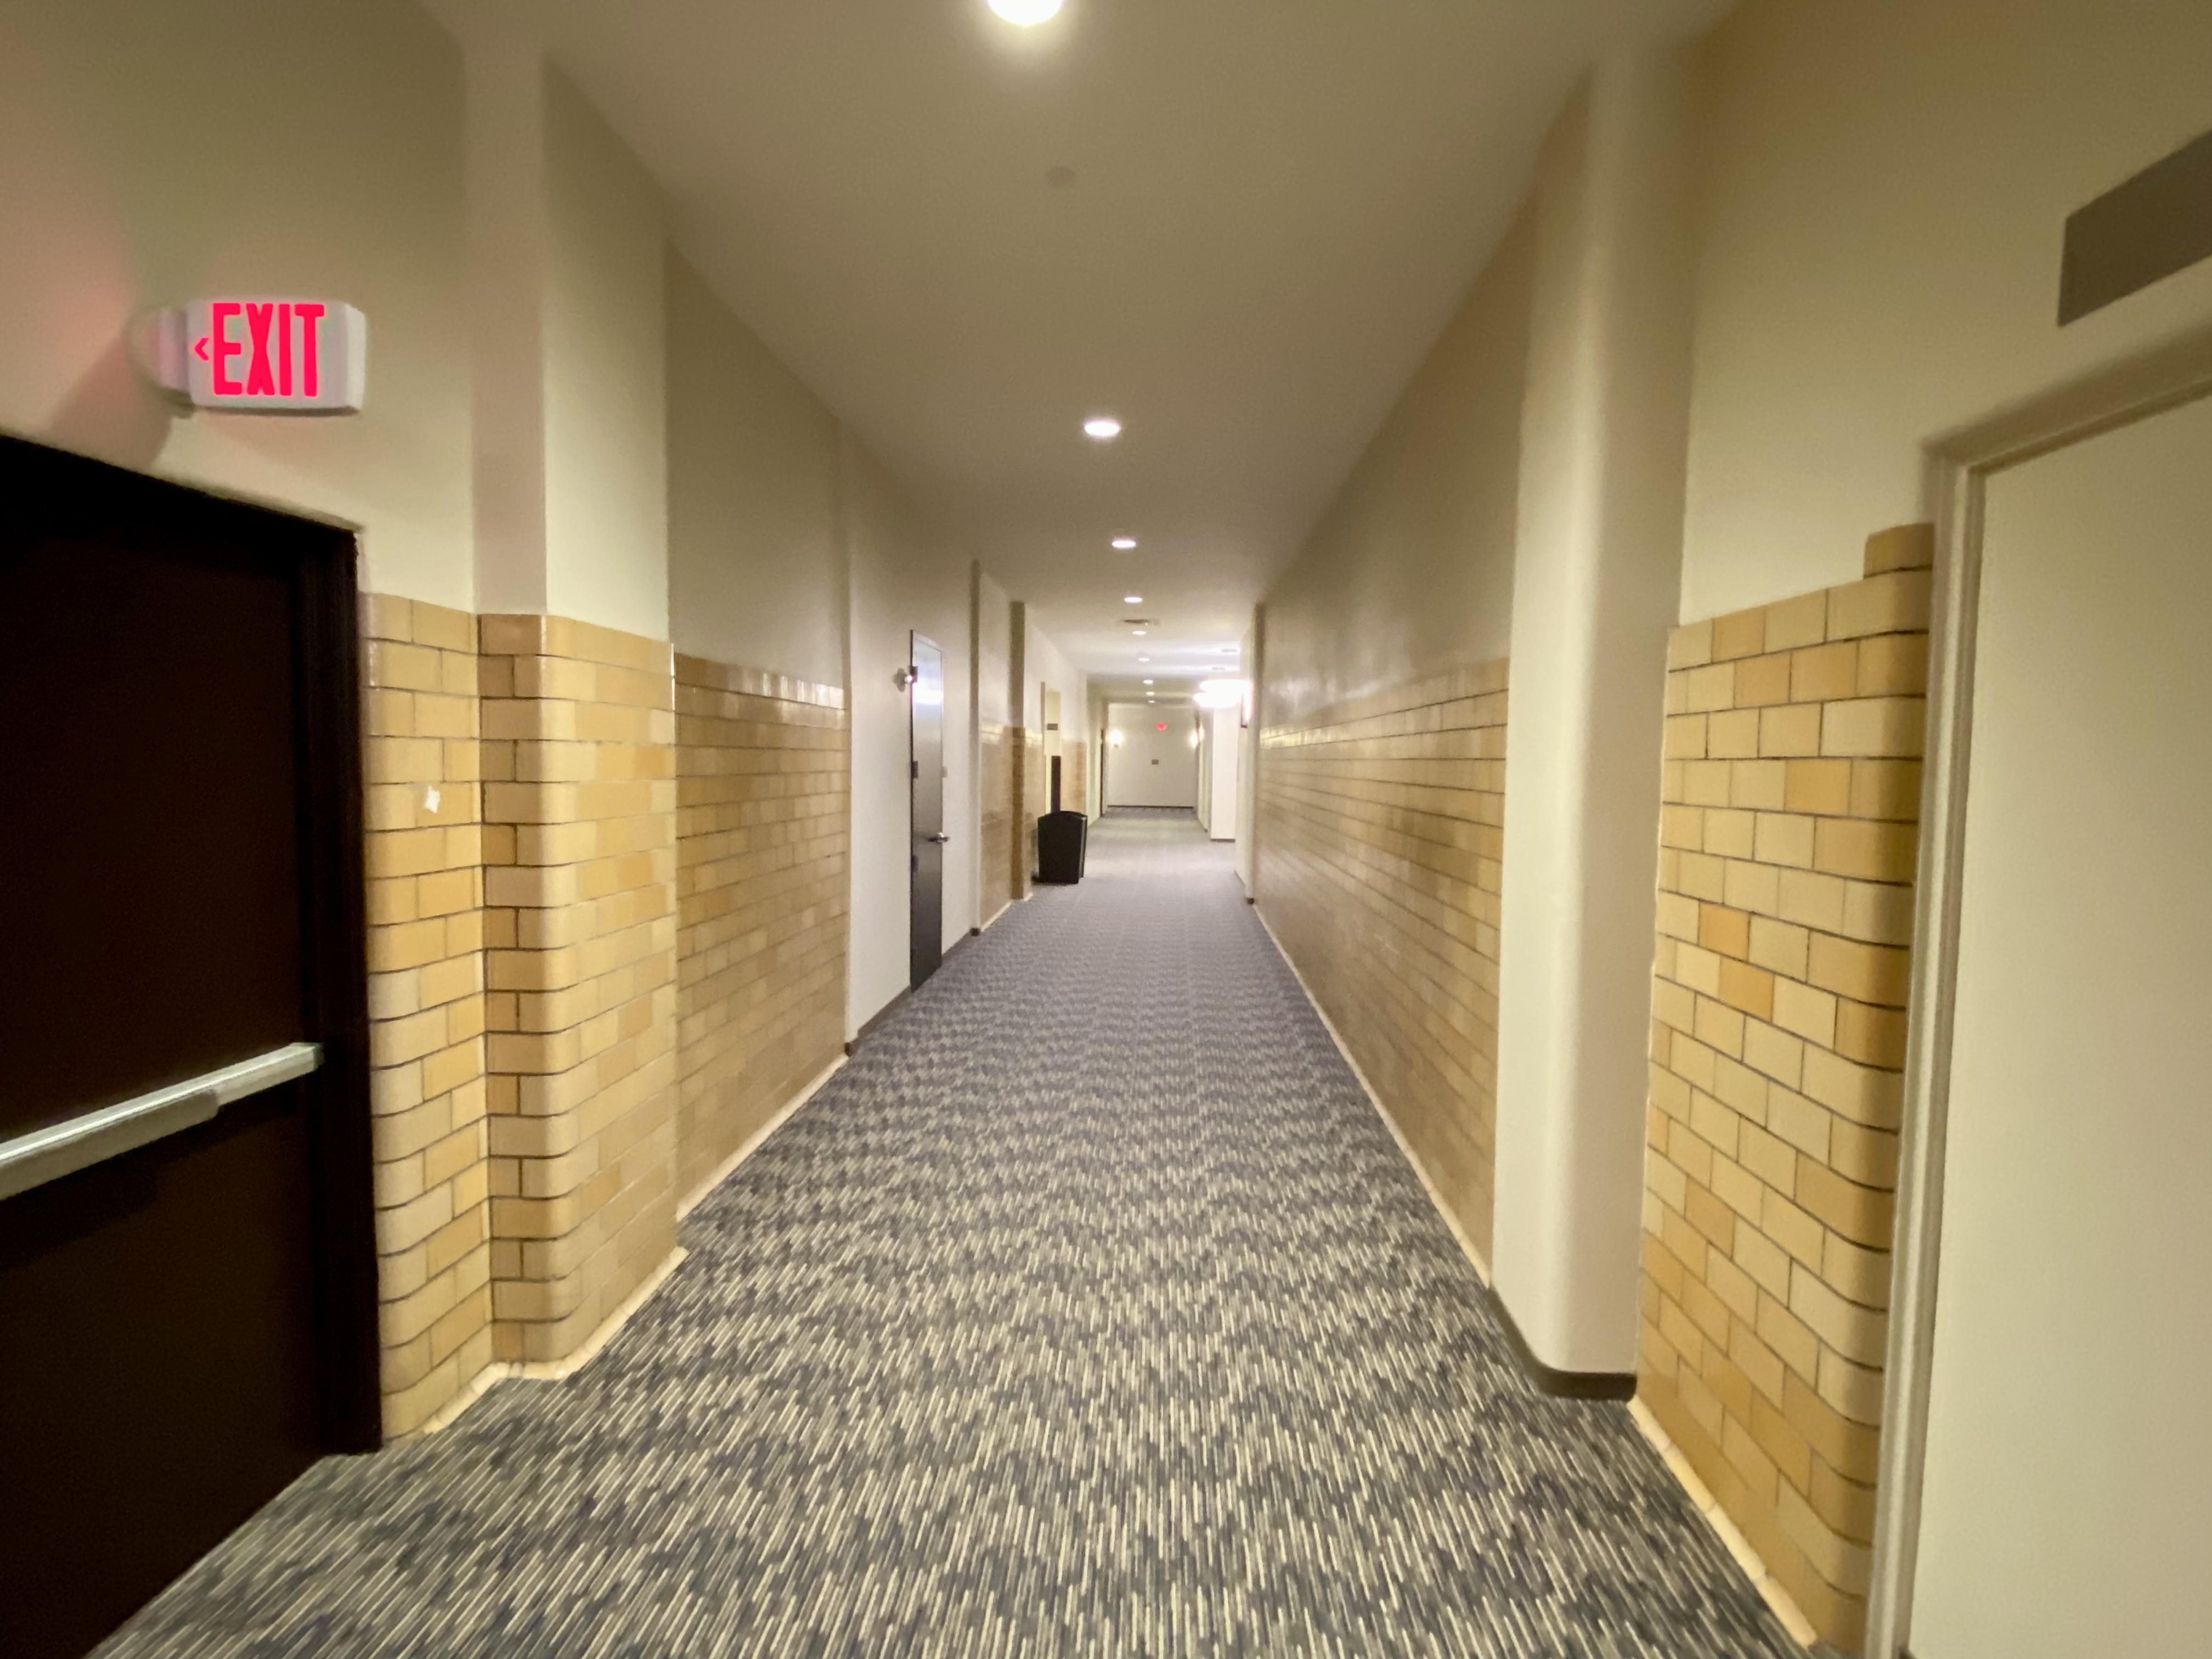 a hallway with brick walls and a door